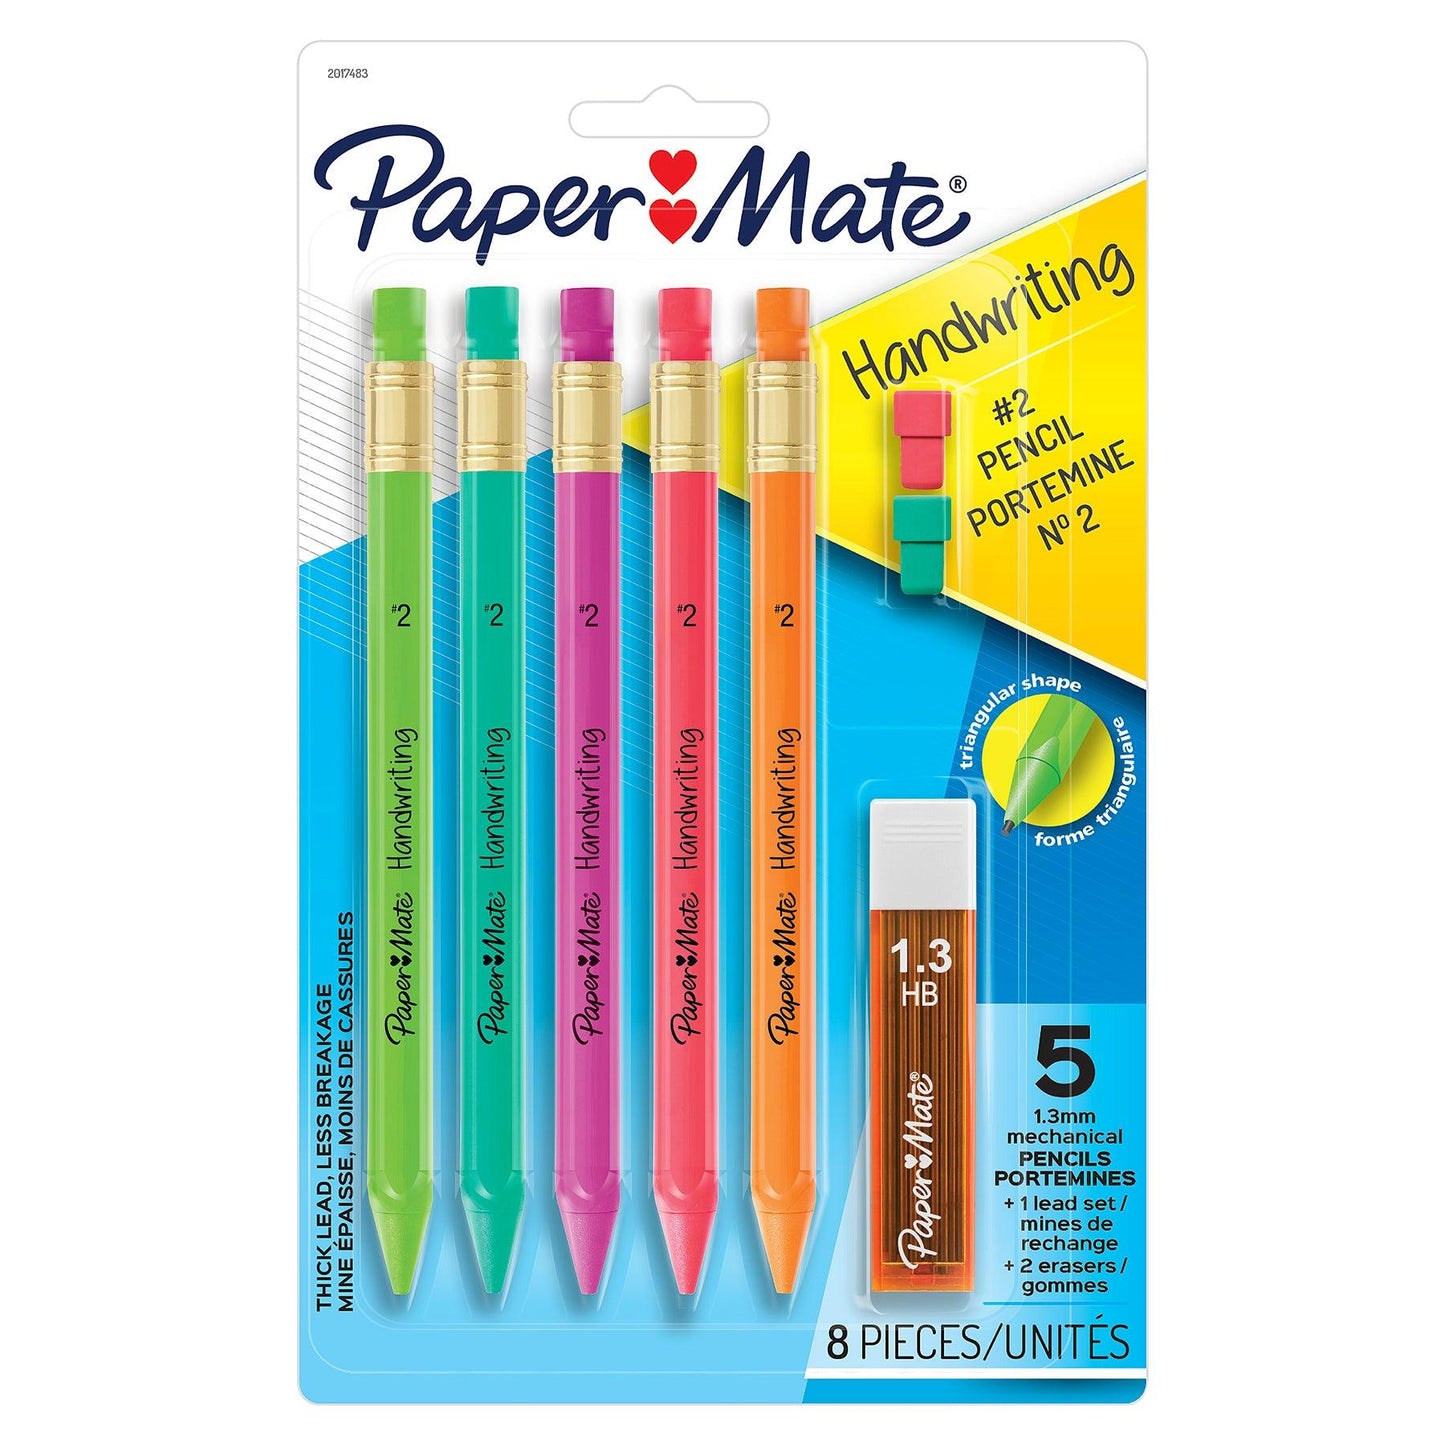 Handwriting Triangular Mechanical Pencil Set with Lead & Eraser Refills, 1.3mm, 5 Per Pack, 6 Packs - Loomini